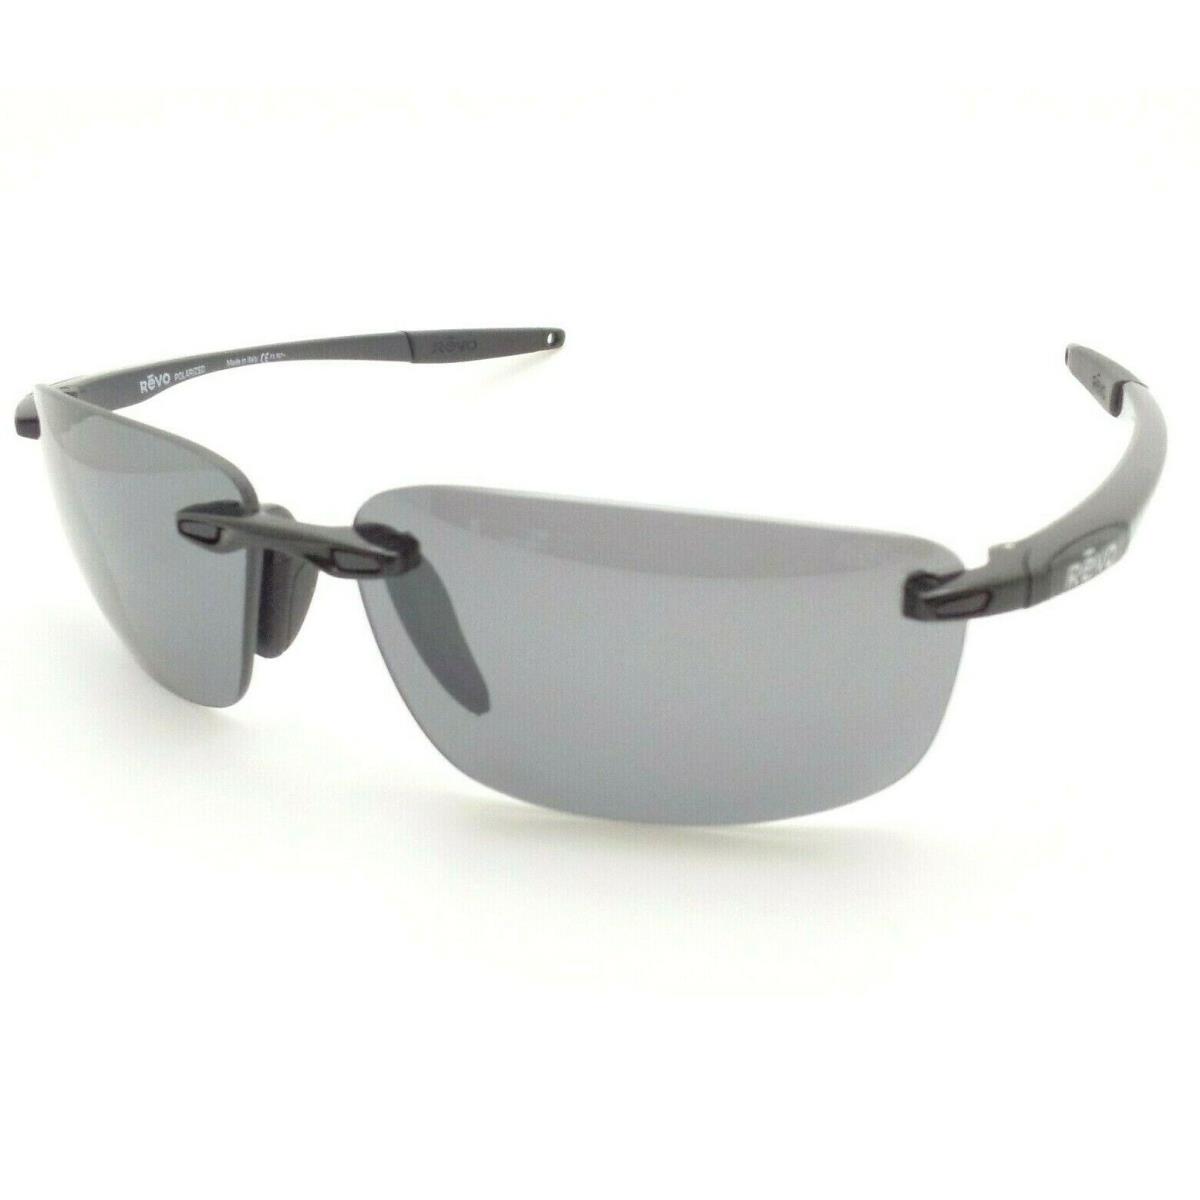 Revo Descend N Black Graphite Polarized Mirror Sunglasses - Black Gloss, Frame: Black, Lens: Blue